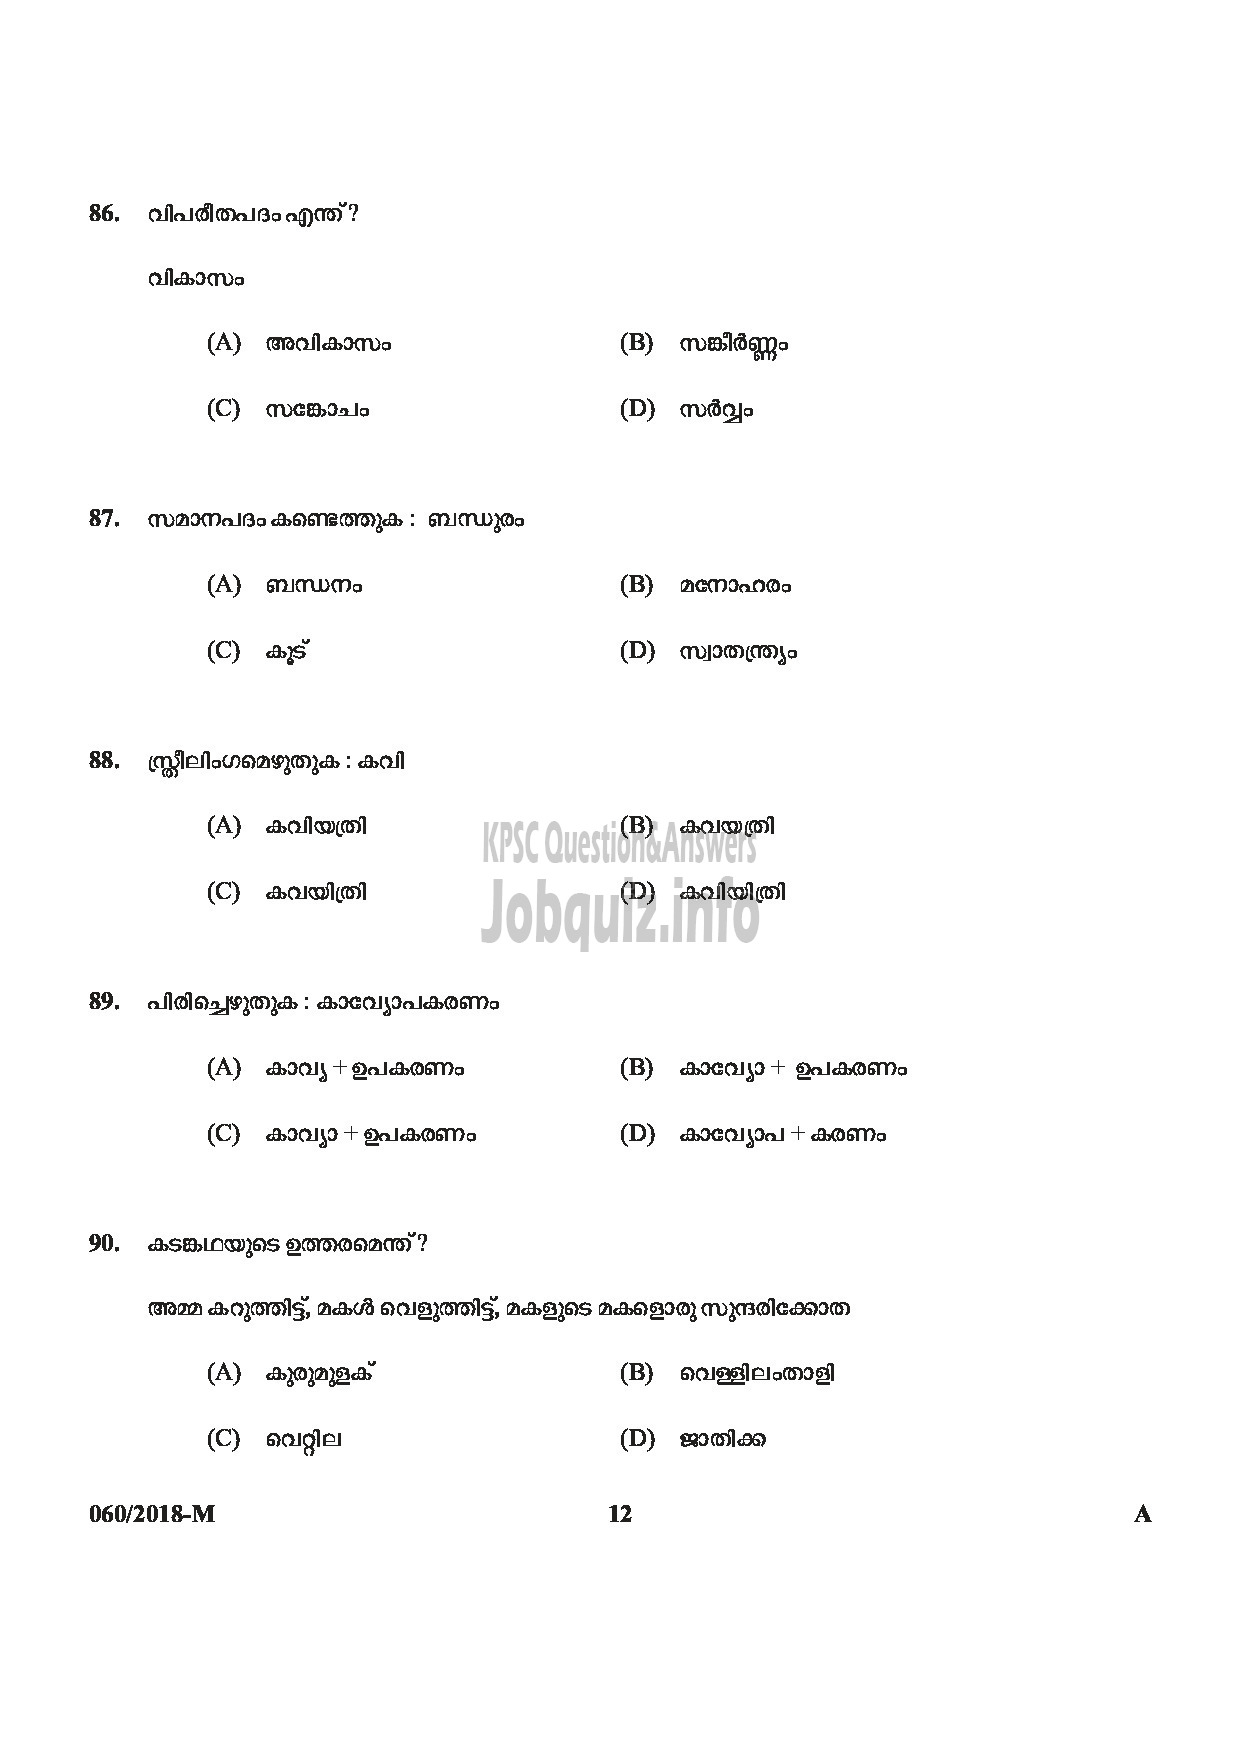 Kerala PSC Question Paper - JUNIOR ASSISTANT / CASHIER / ASSISTANT GRADE II / CLERK GR I KSFE LTD / KSEB LTD / KSRTC / FOAM MATTINGS ETC ENGLISH / MALAYALAM-12